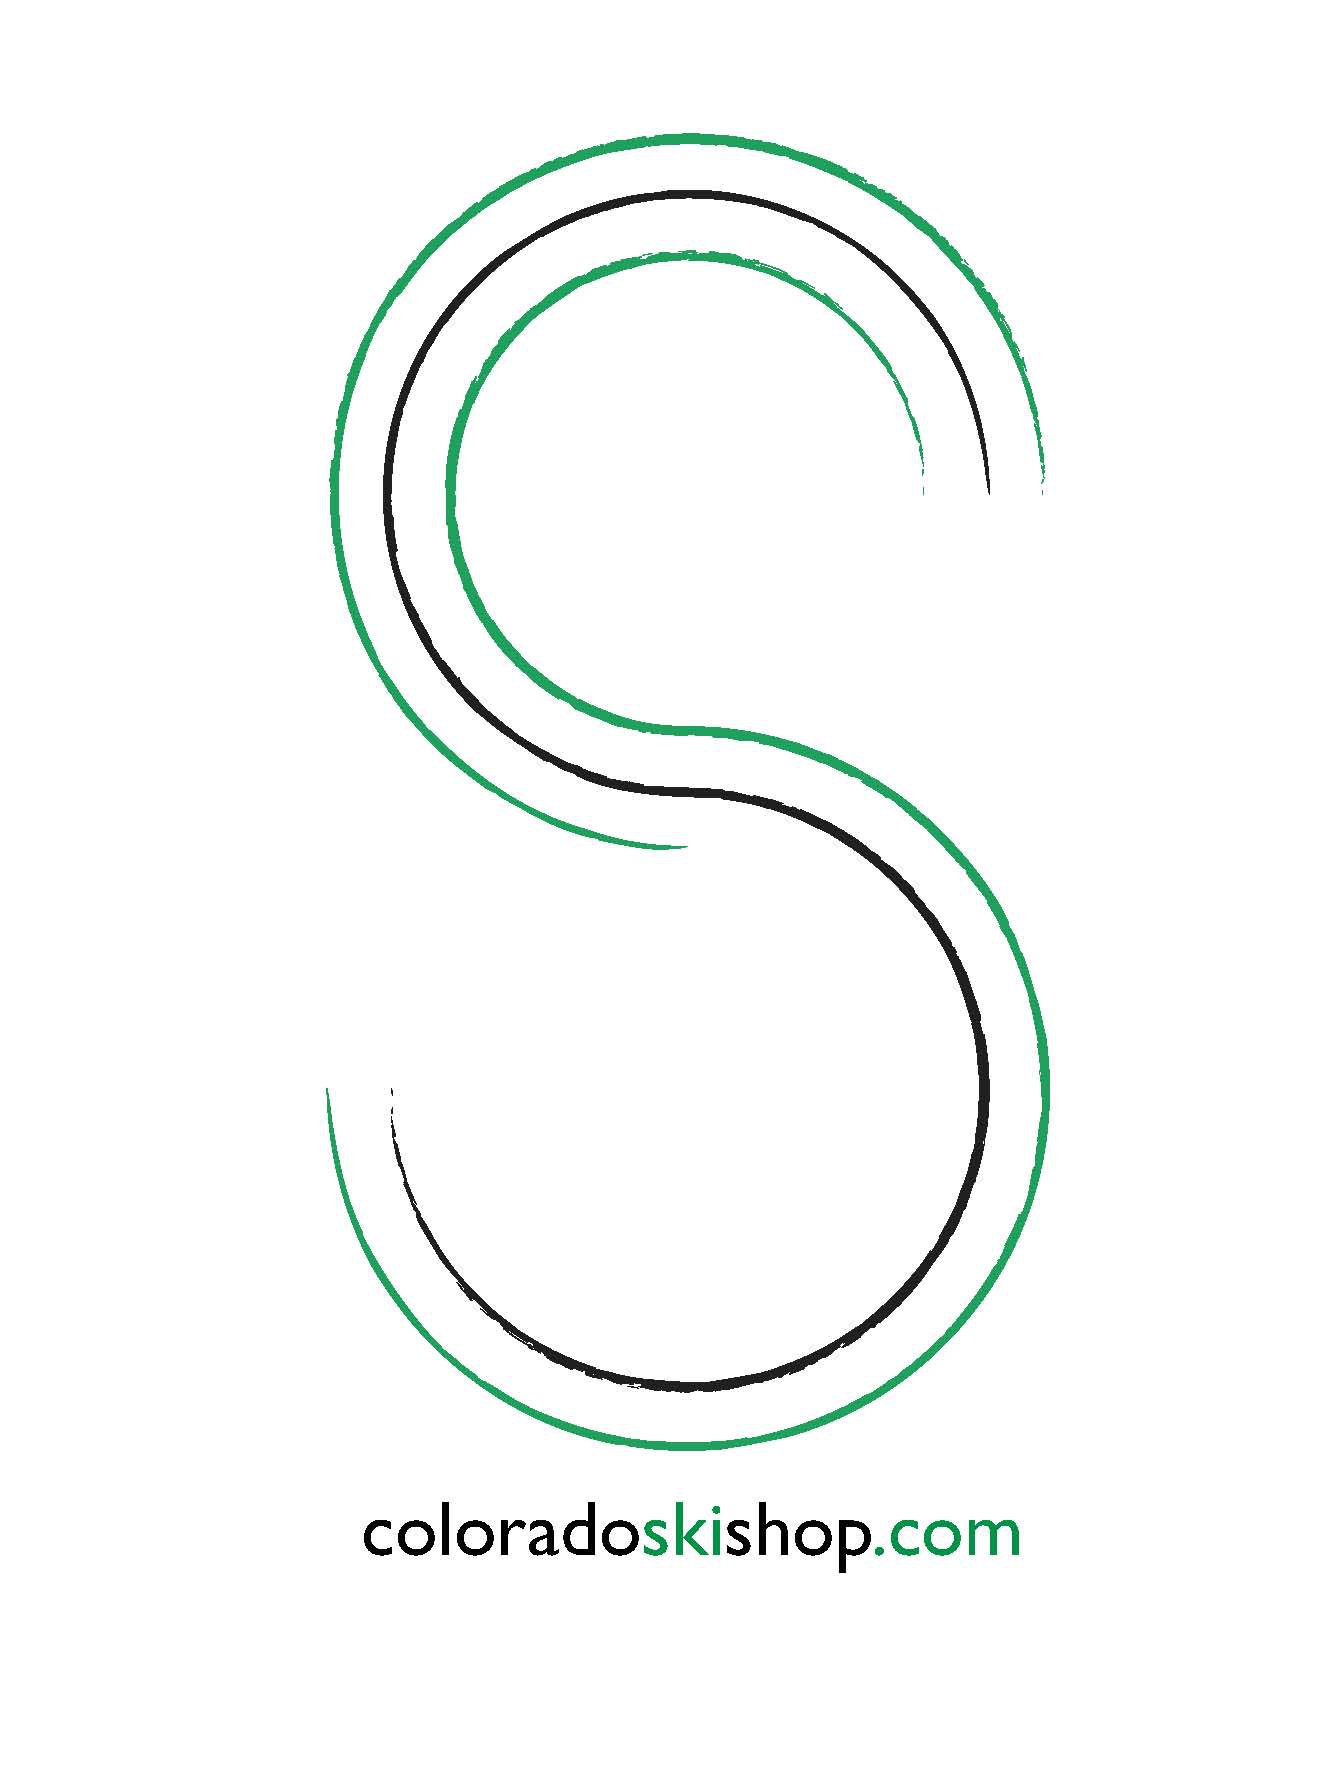 CSS logo2